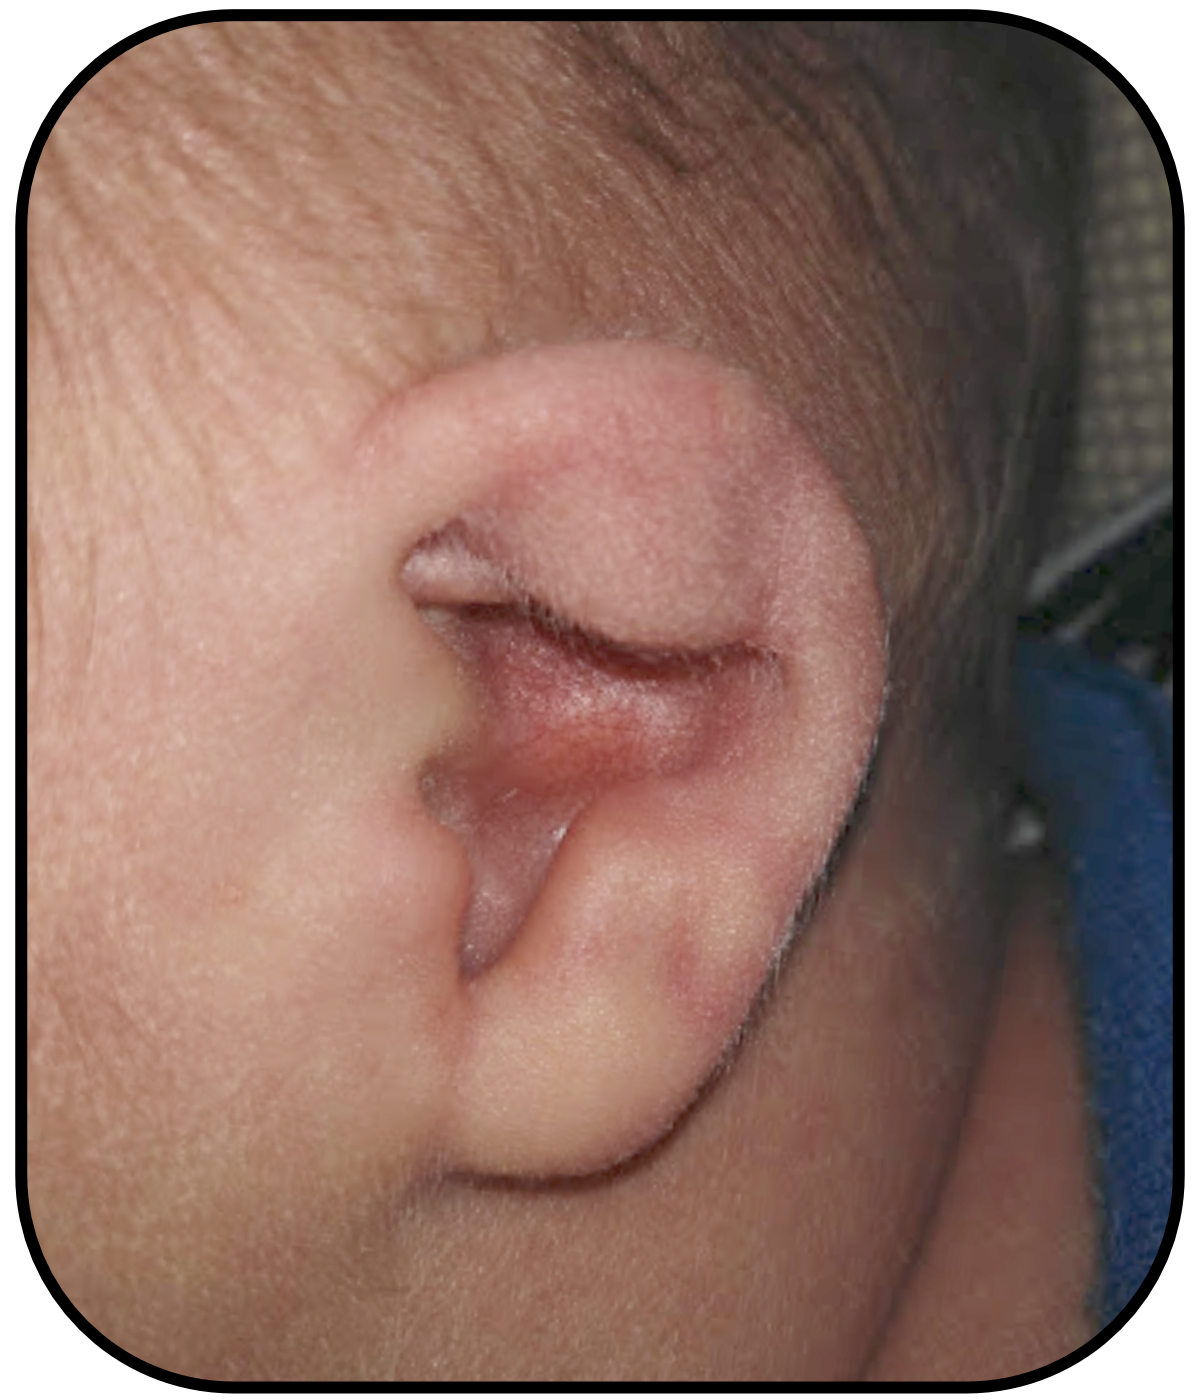 Baby's Ear folds over